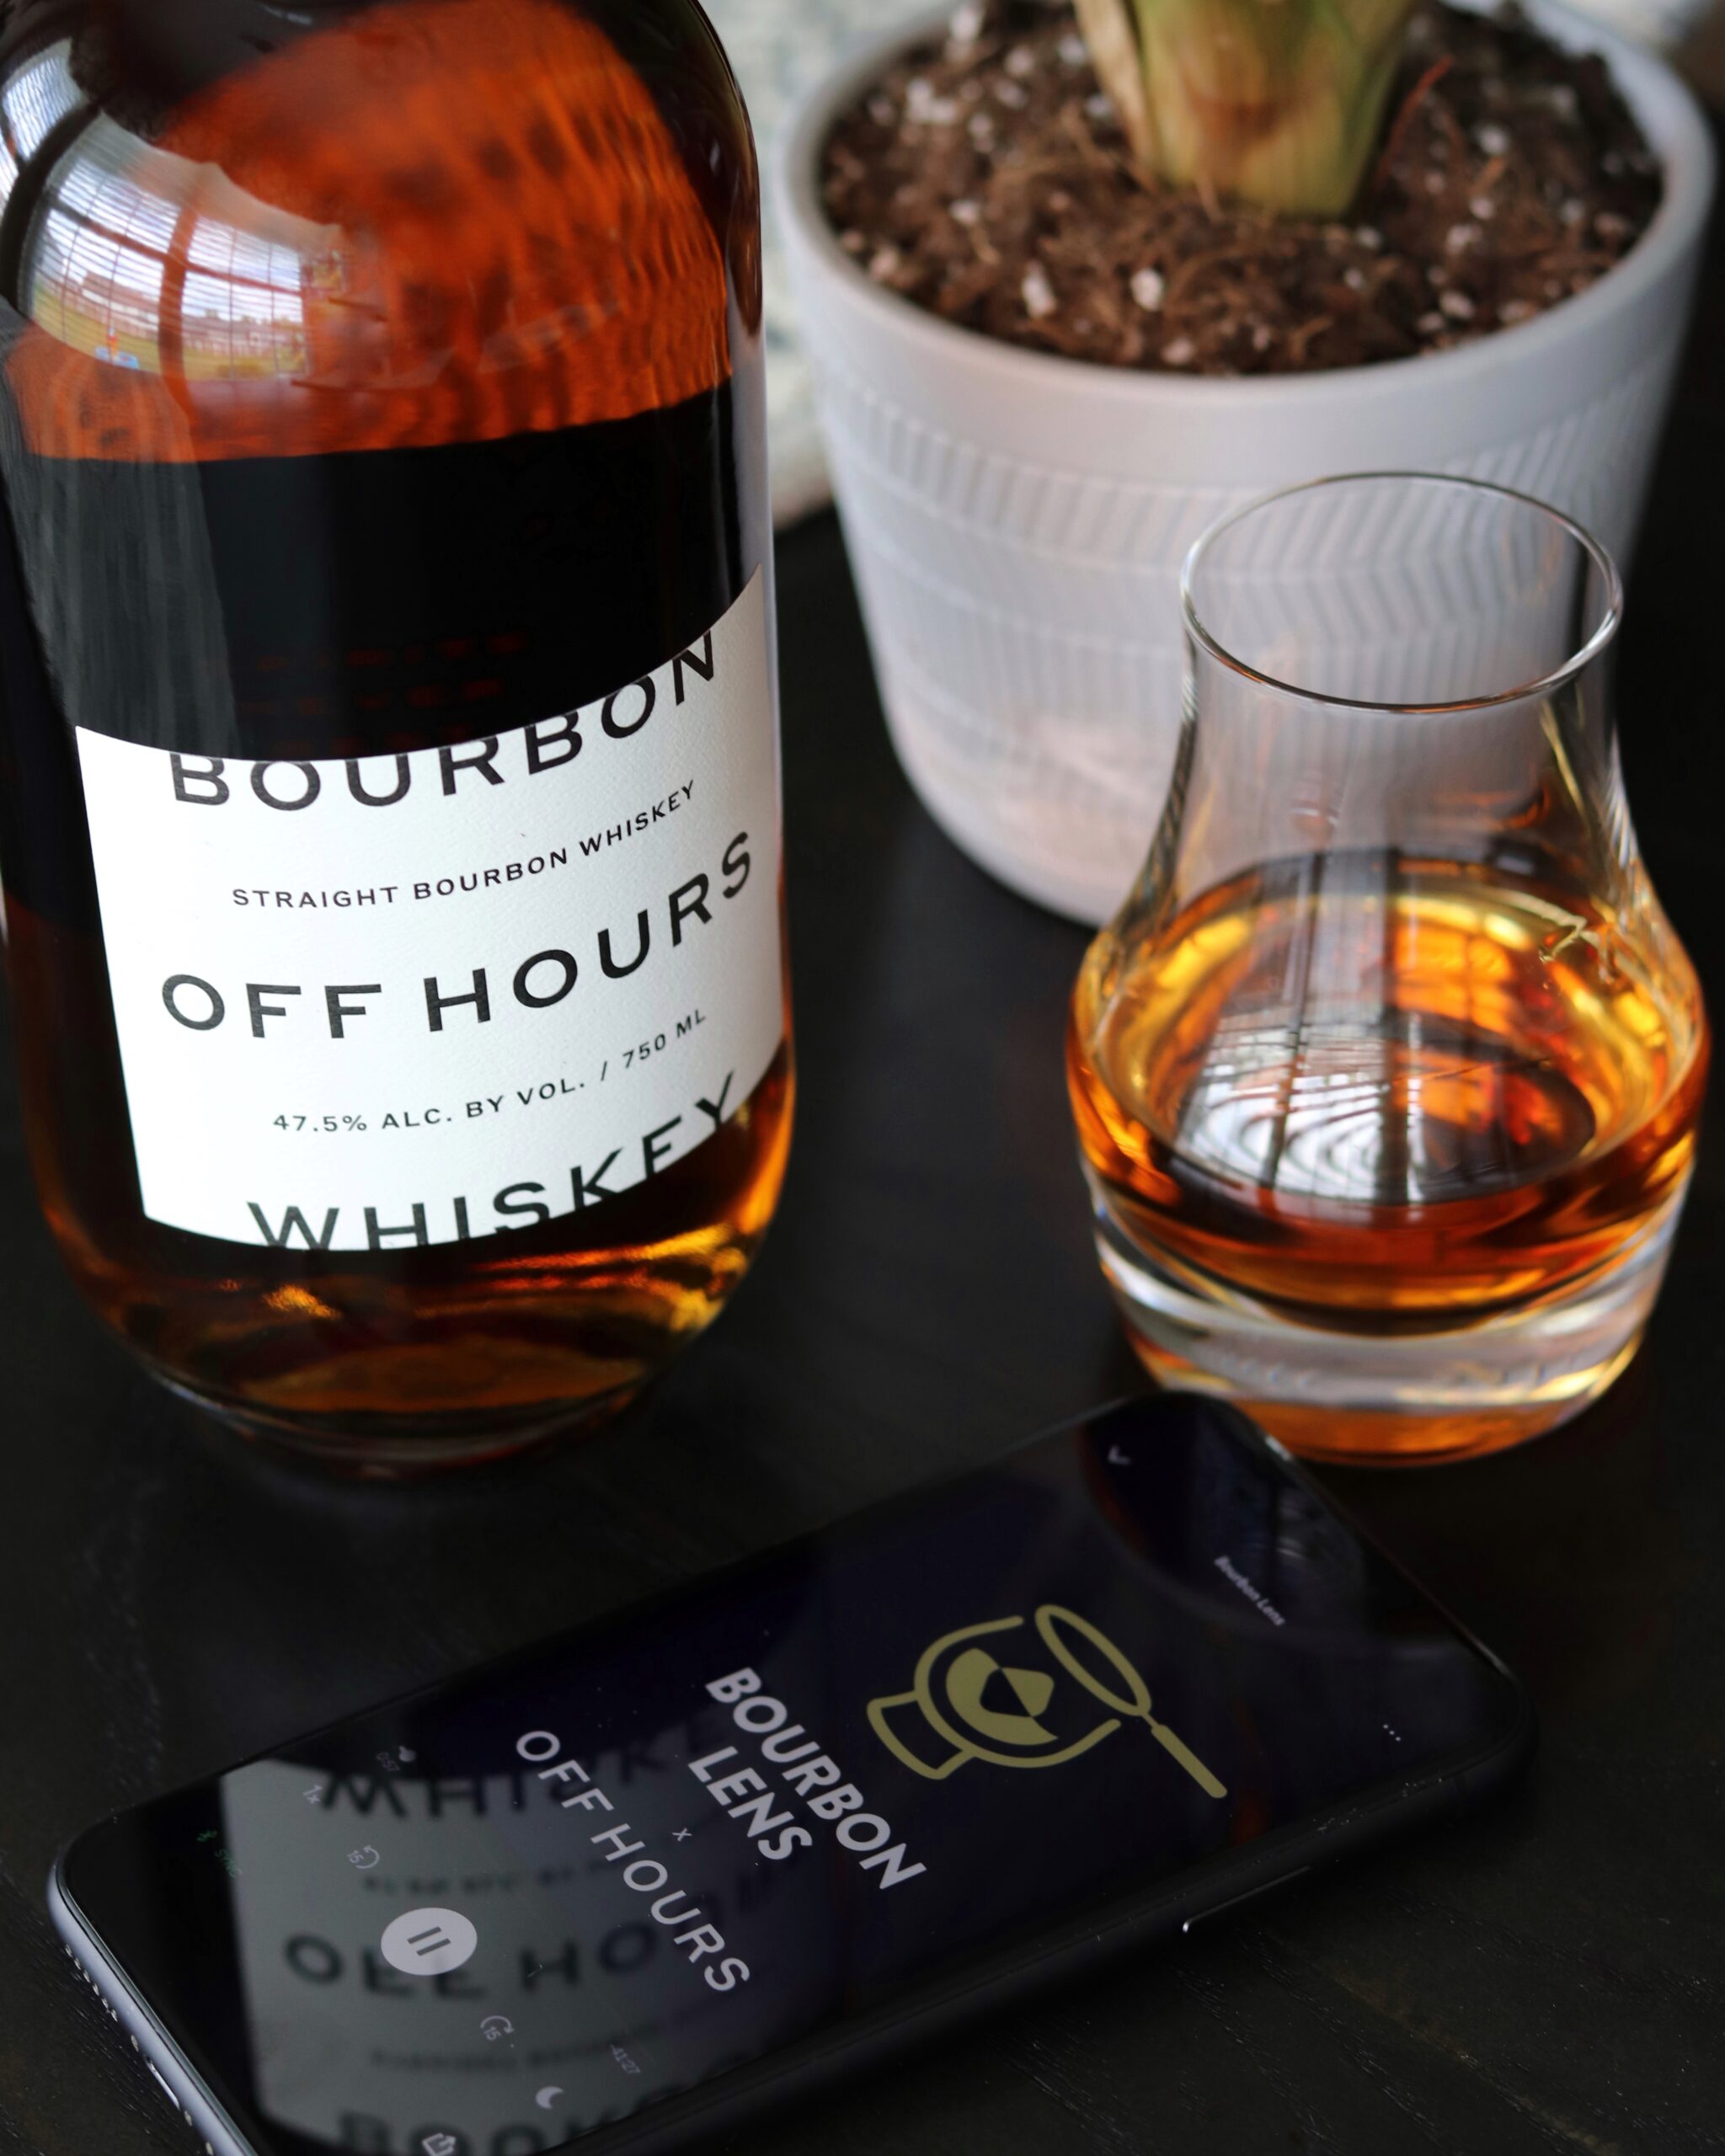 Off Hours Bourbon